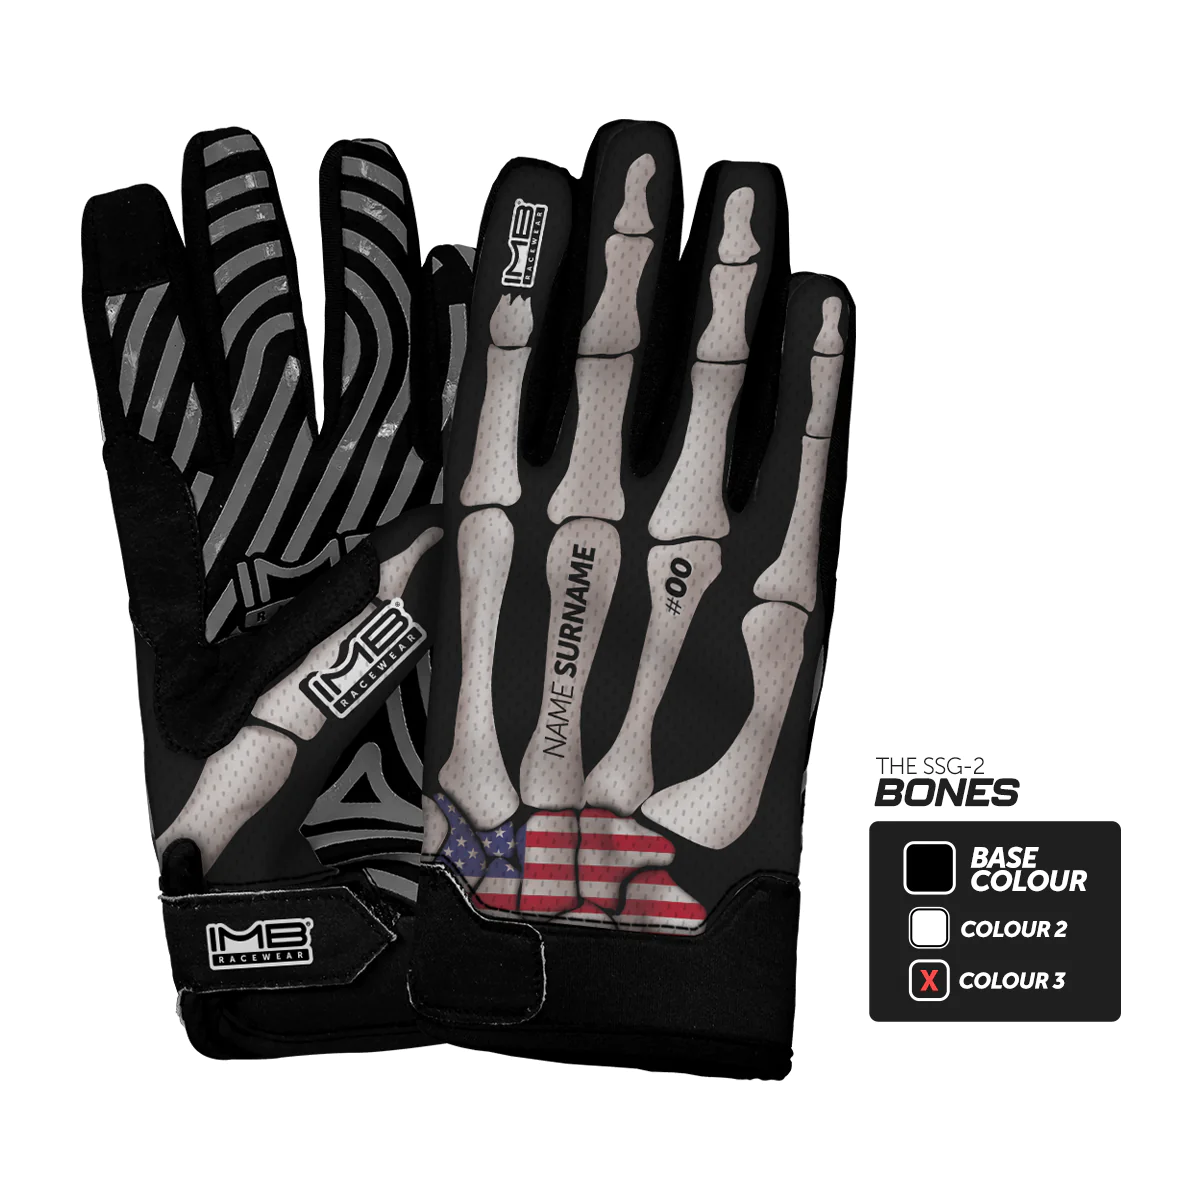 The Bones SSG-2 Short Sim Racing Gloves